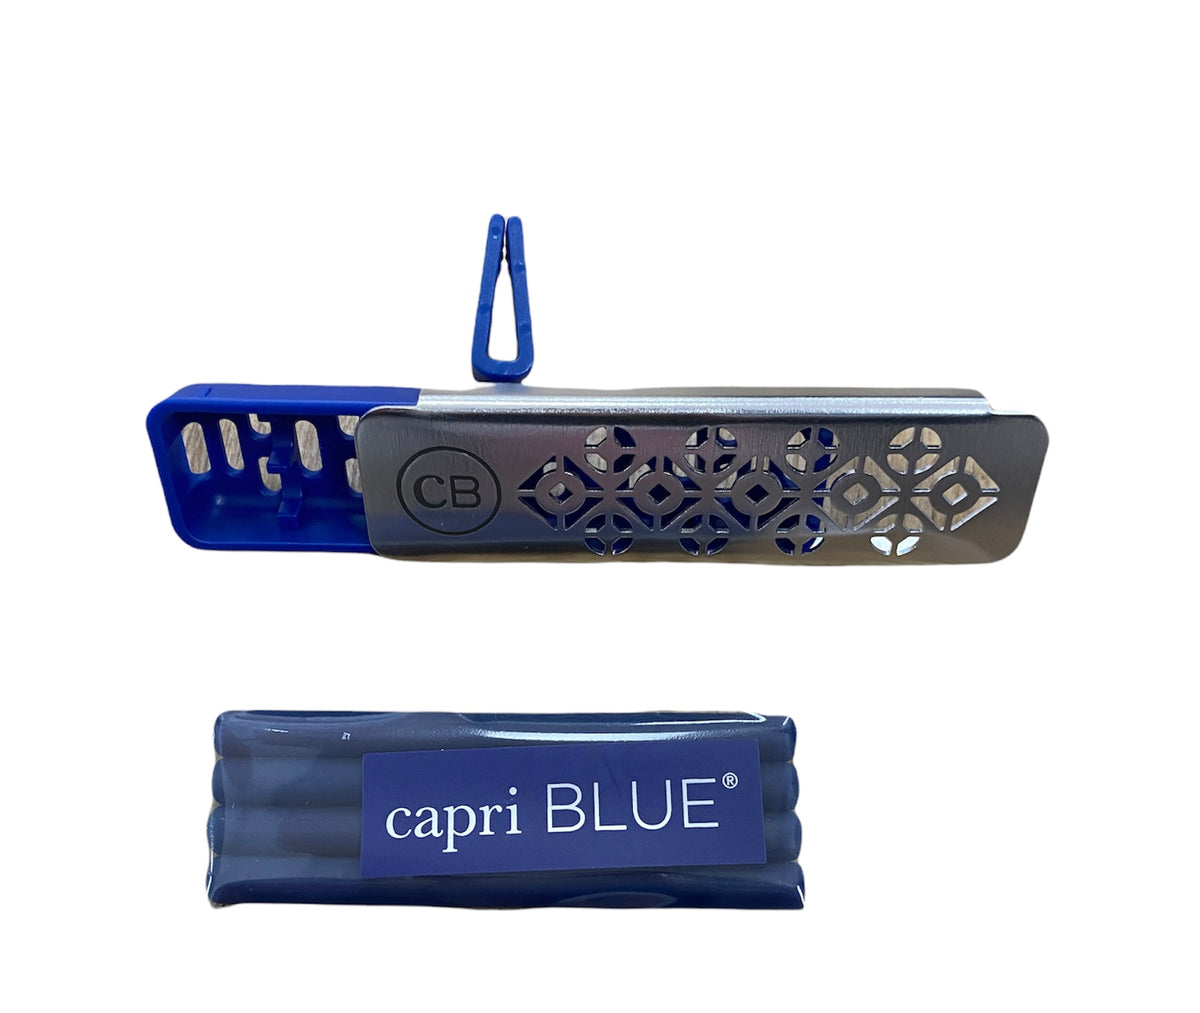 Capri Blue Volcano Car Diffuser Fragrance Refills - Her Hide Out